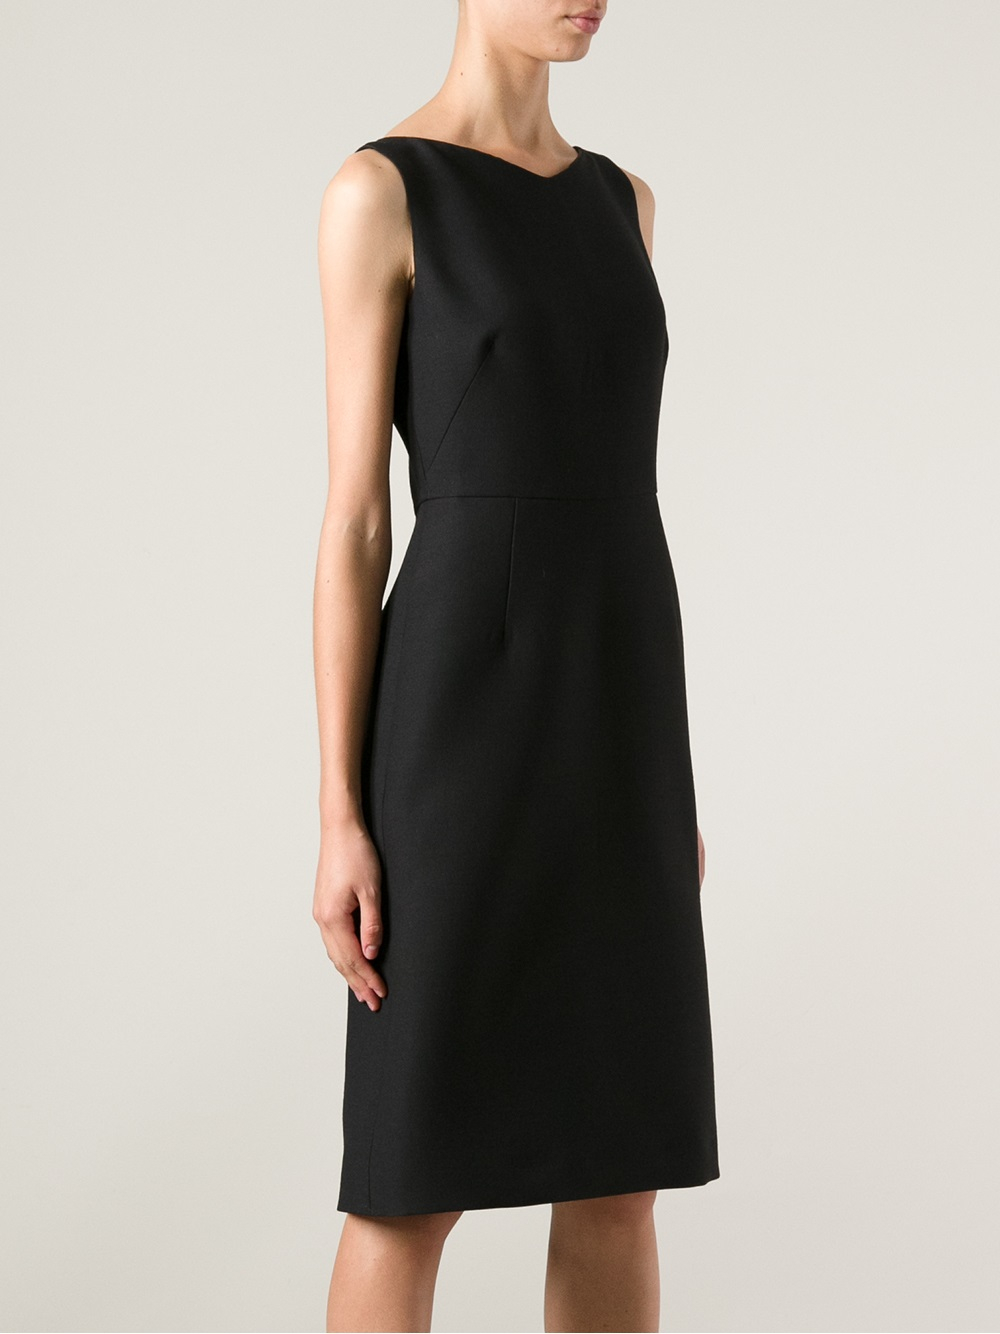 Lyst - Valentino Mid Length Dress in Black